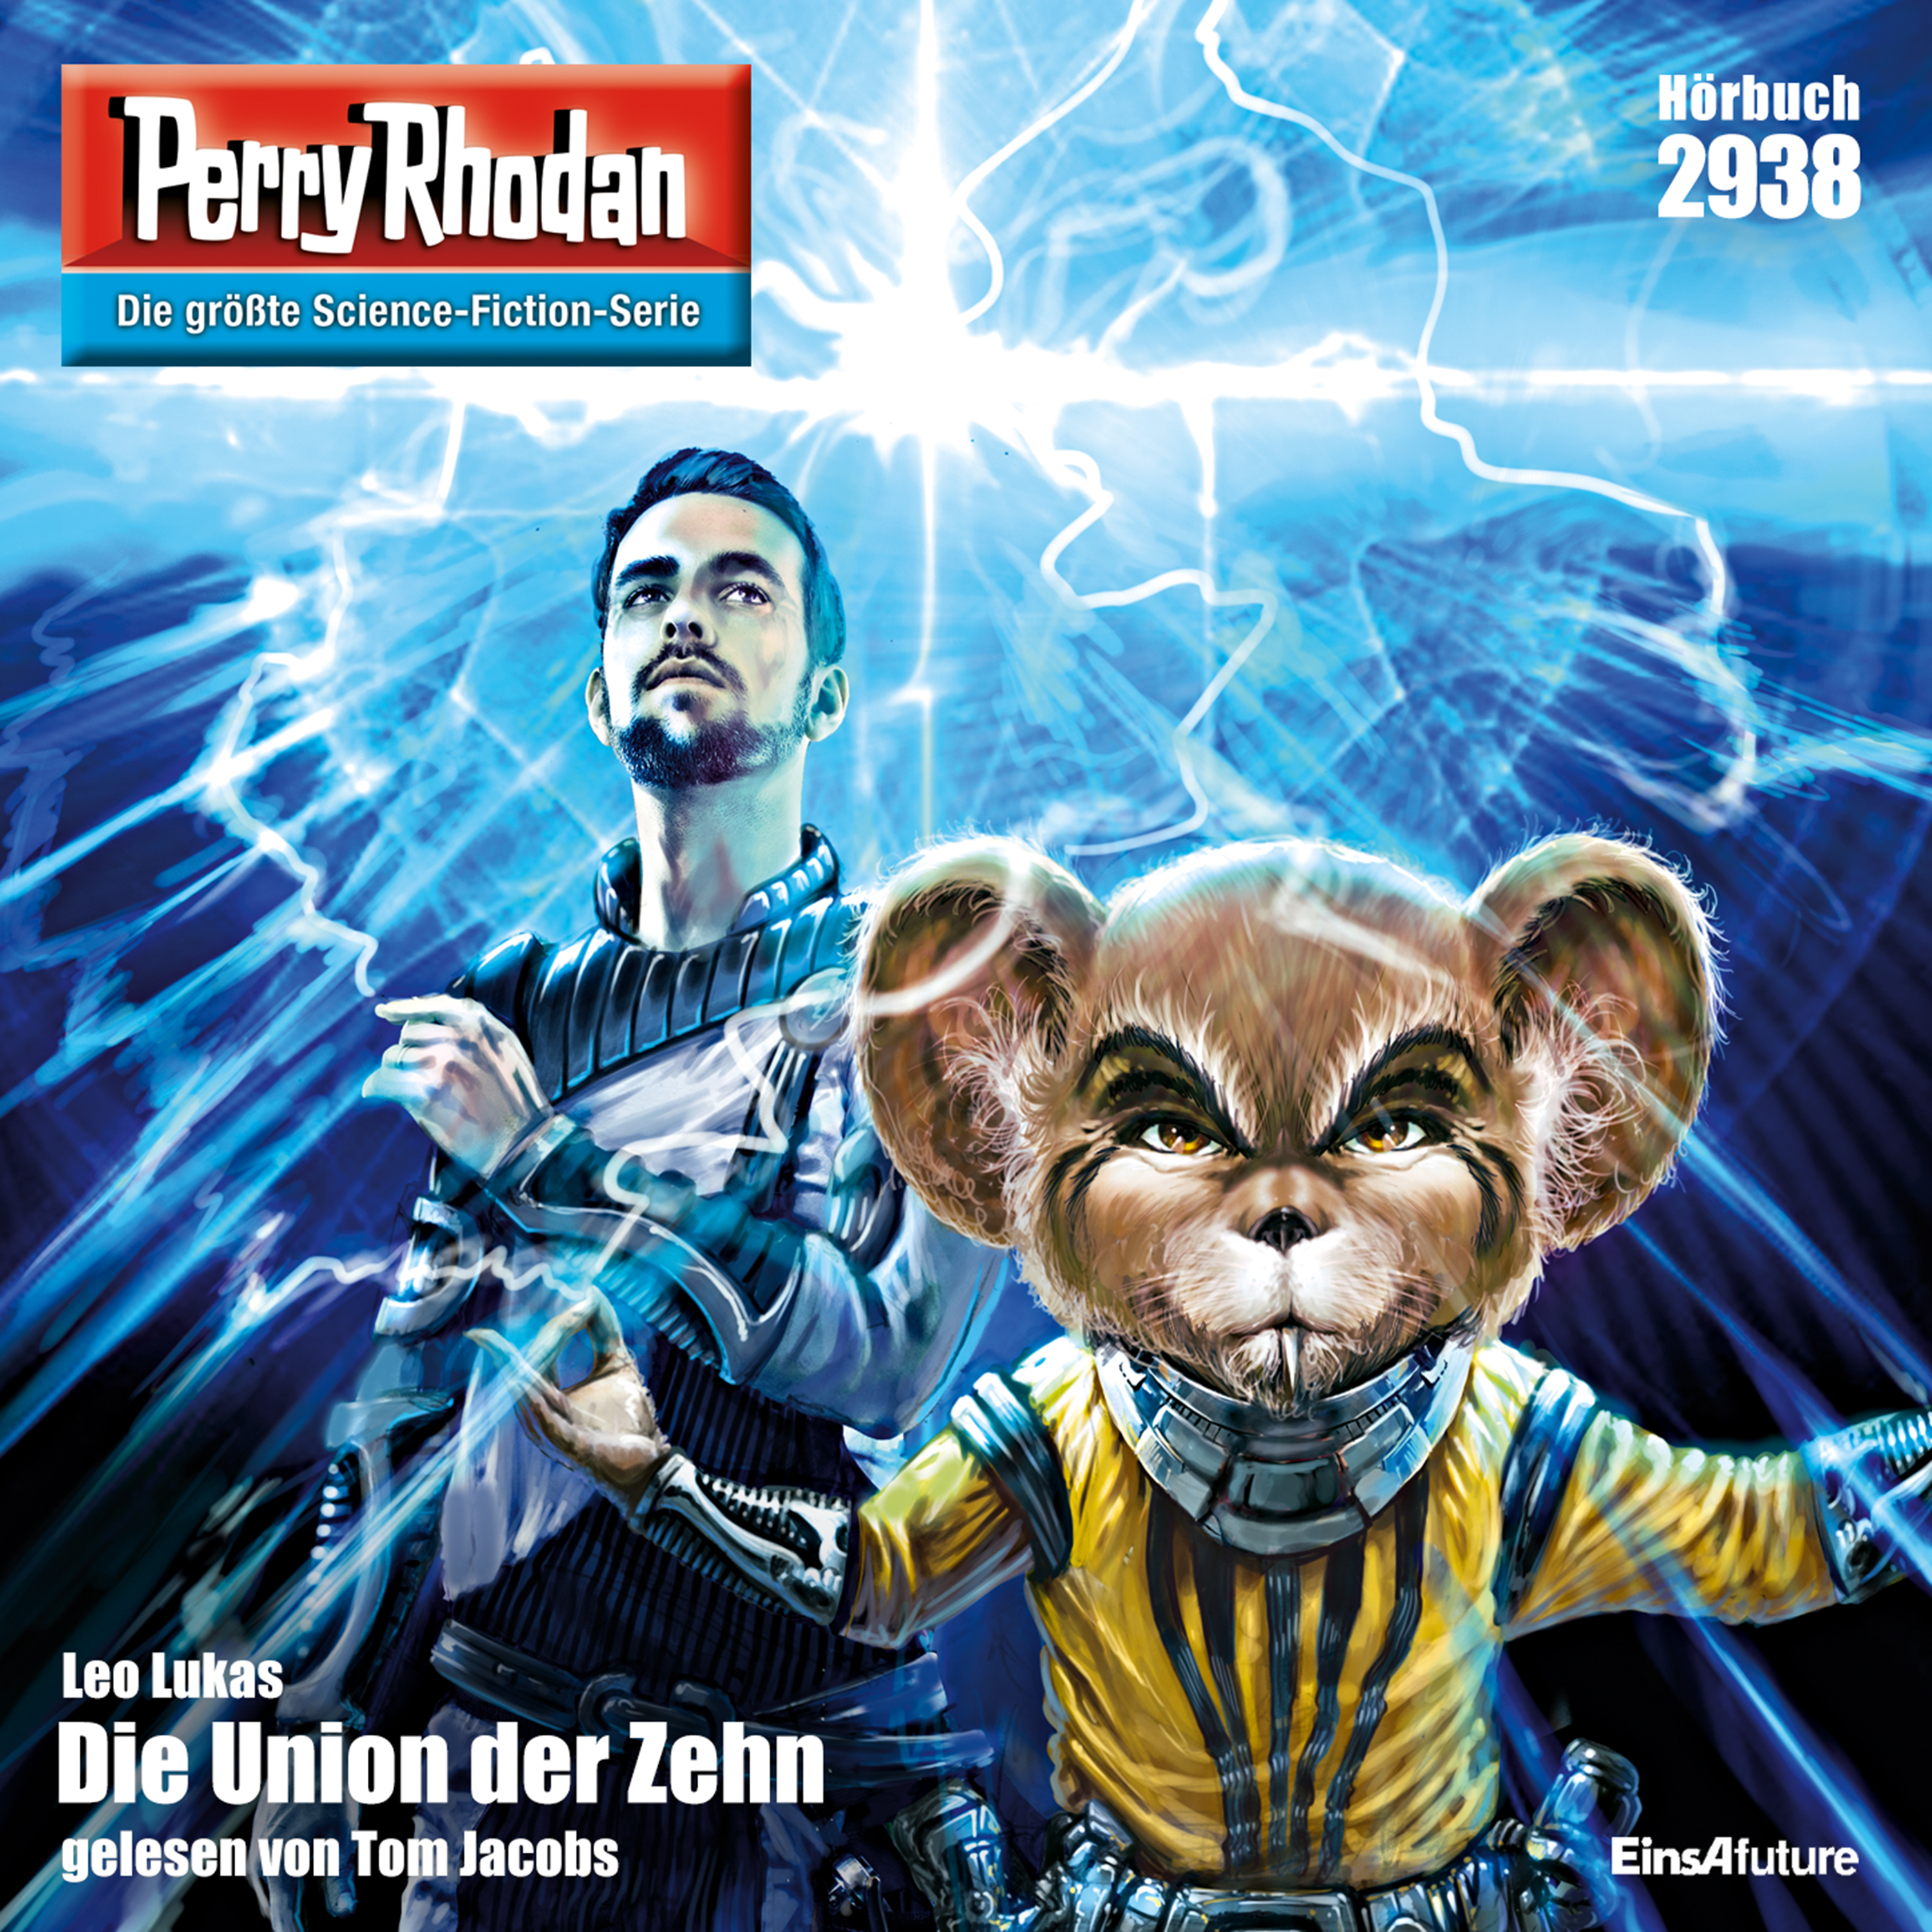 Perry Rhodan Nr. 2938: Die Union der Zehn (Hörbuch-Download)